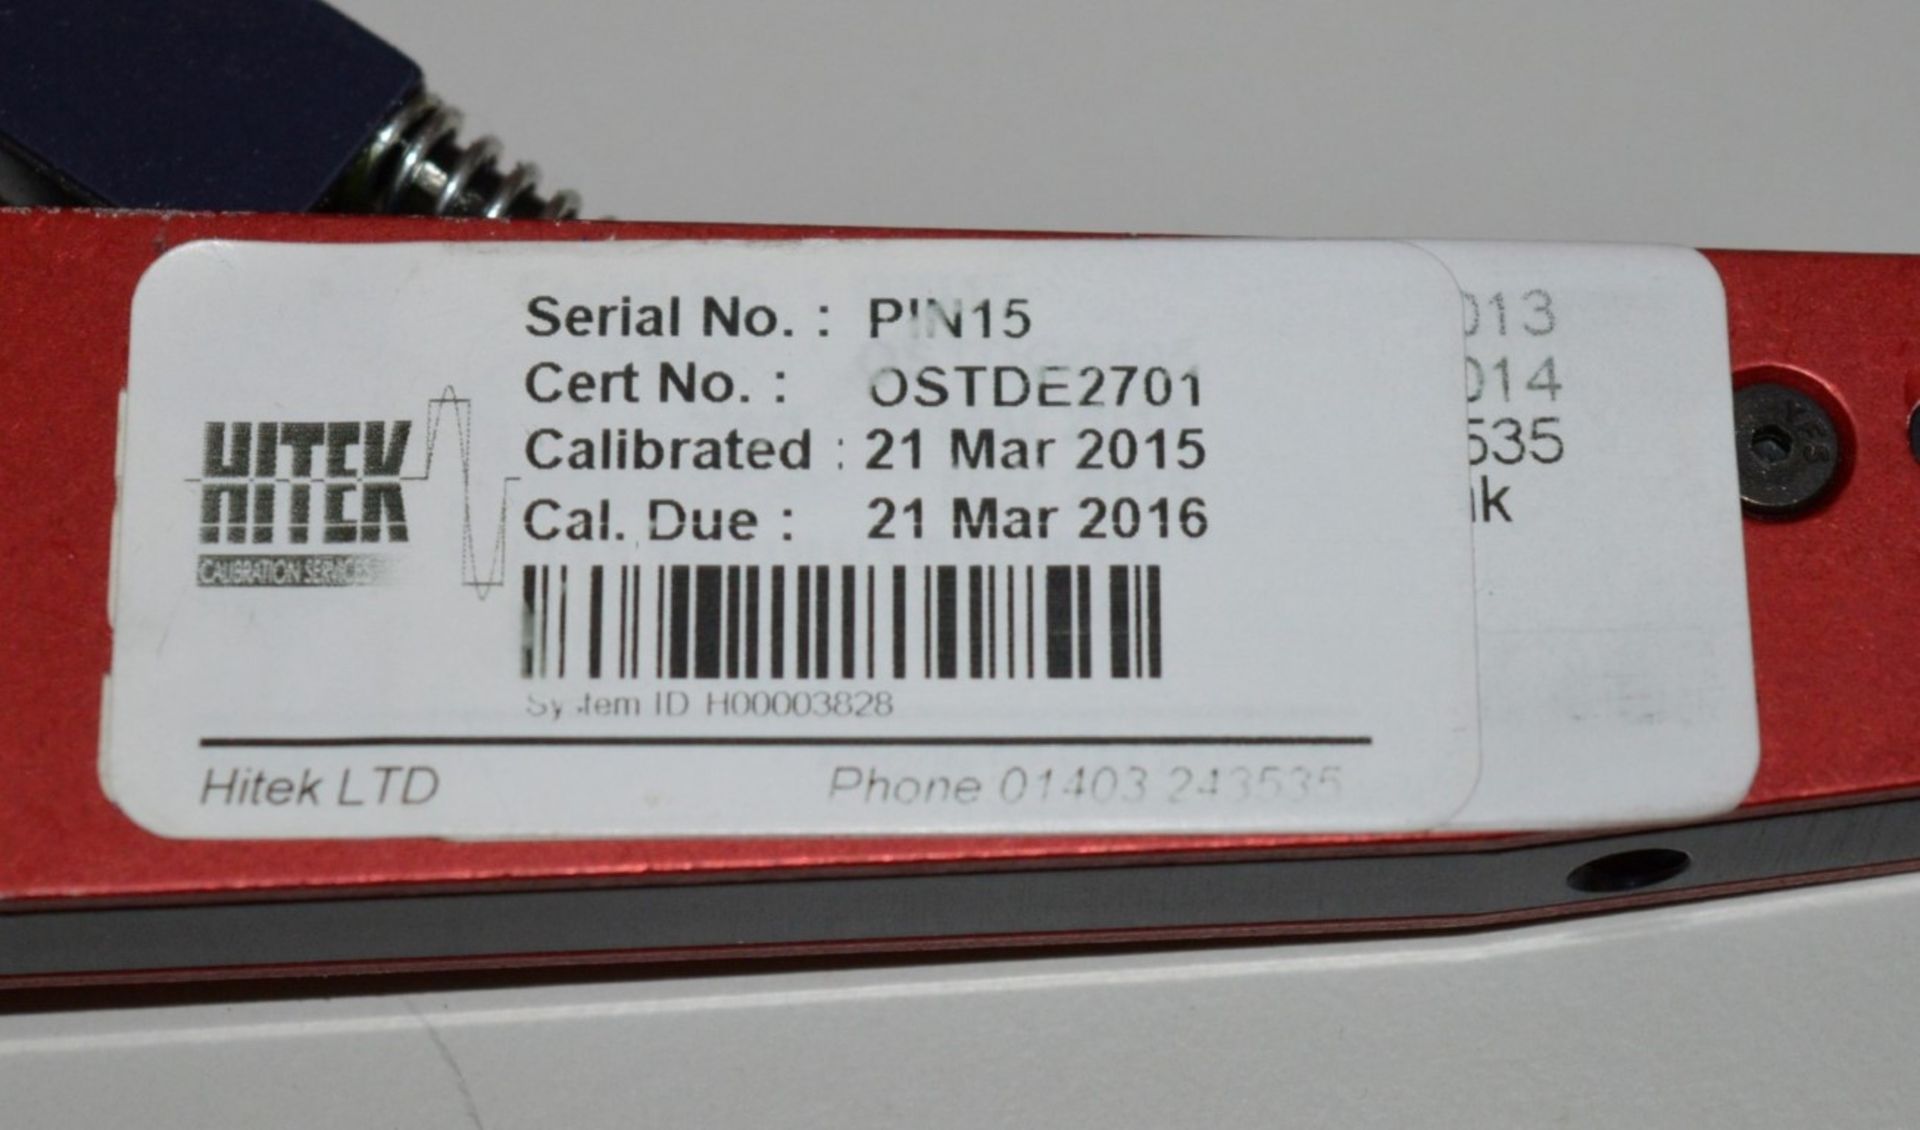 1 x DMC Crimp Tool MH800 (GB109) - Calibarated Until 21st March 2016 - Ultra precision crimp tool - Image 5 of 10